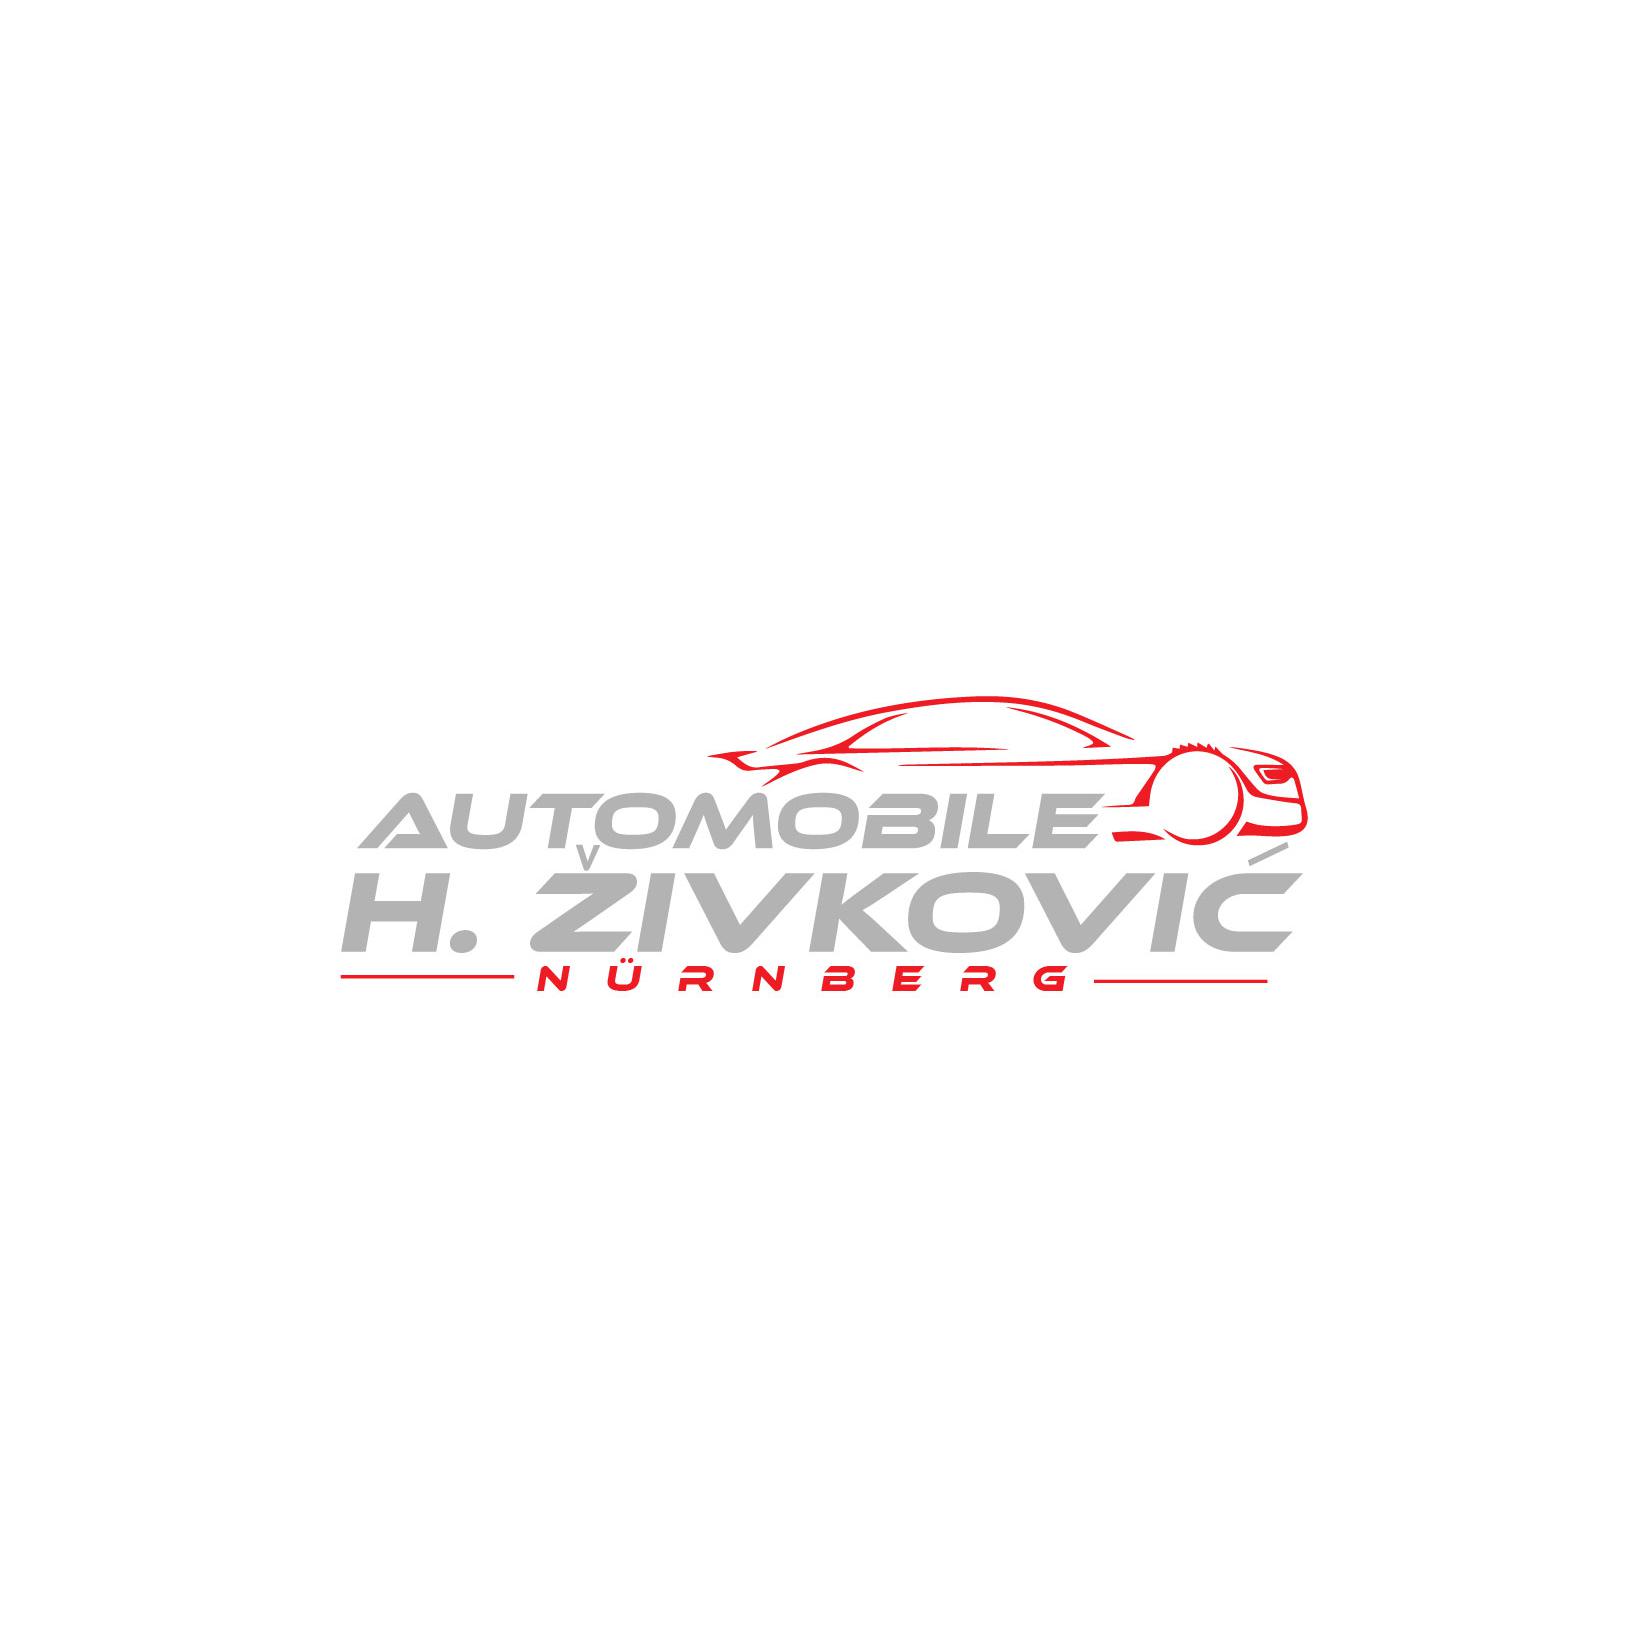 Logo Automobile H. Zivkovic